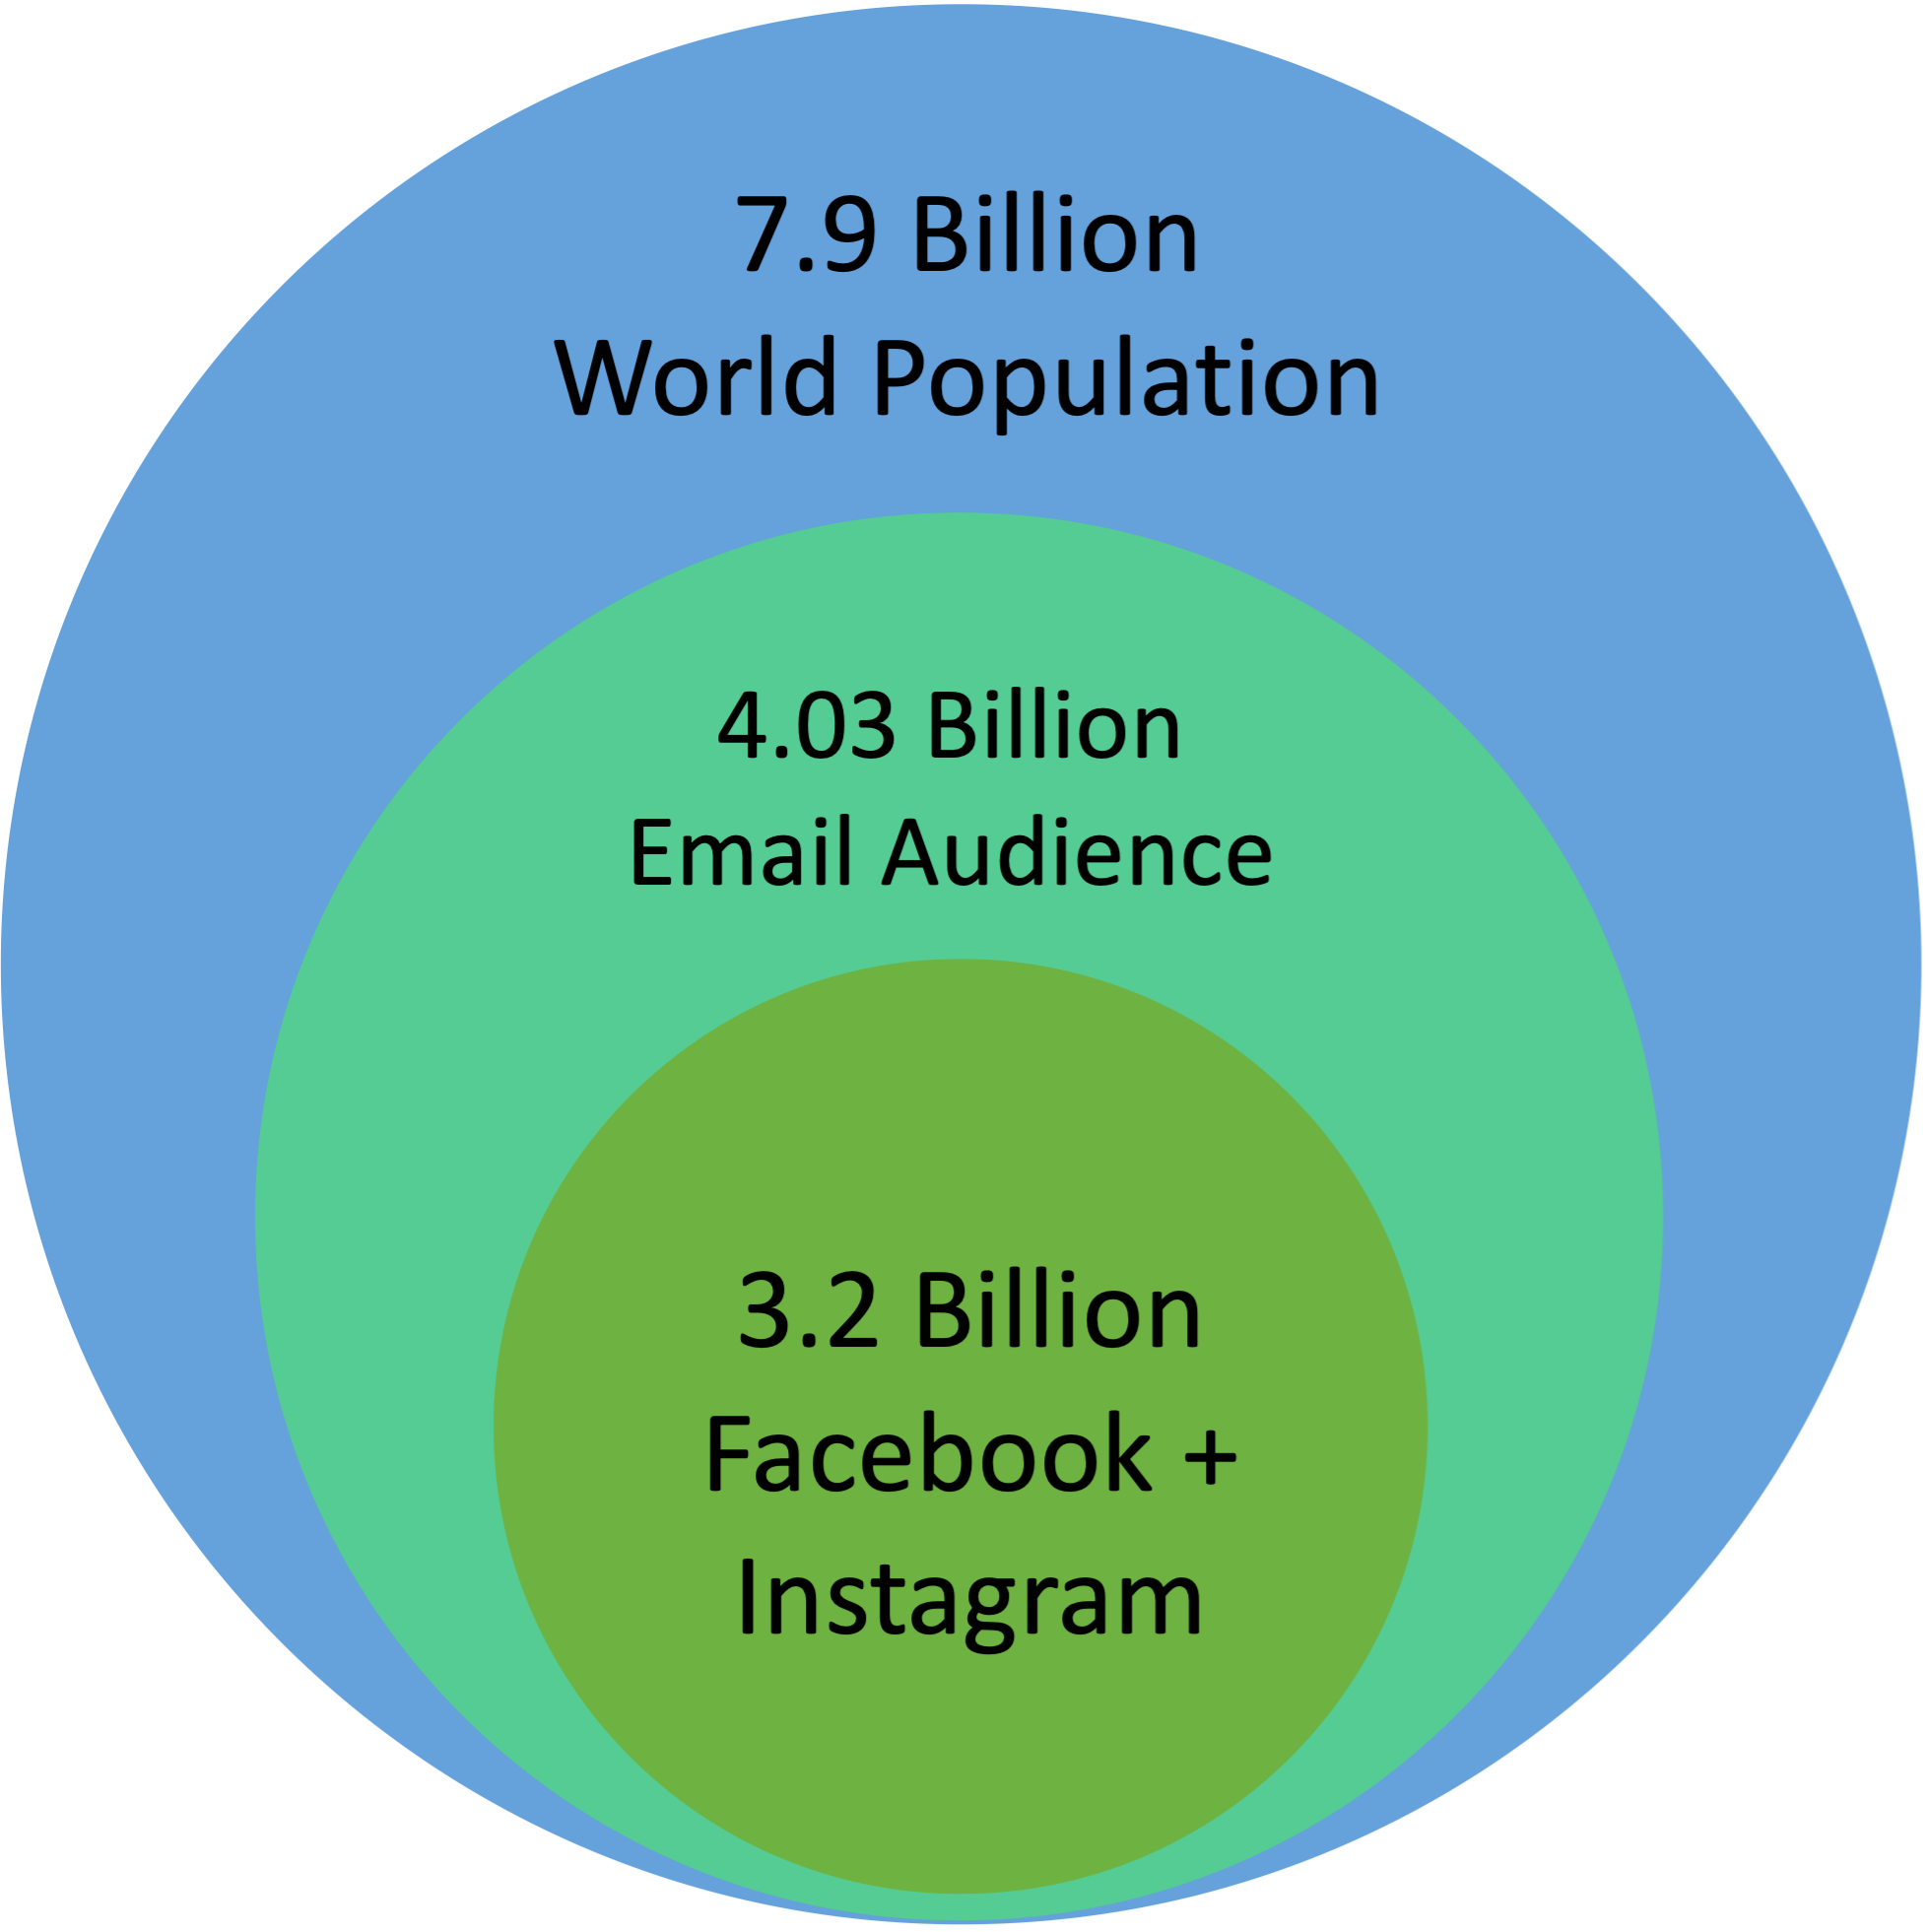 7.9 billion of world population, 4.03 billion email audience, 3.2 billion Facebook+Instagram audience.